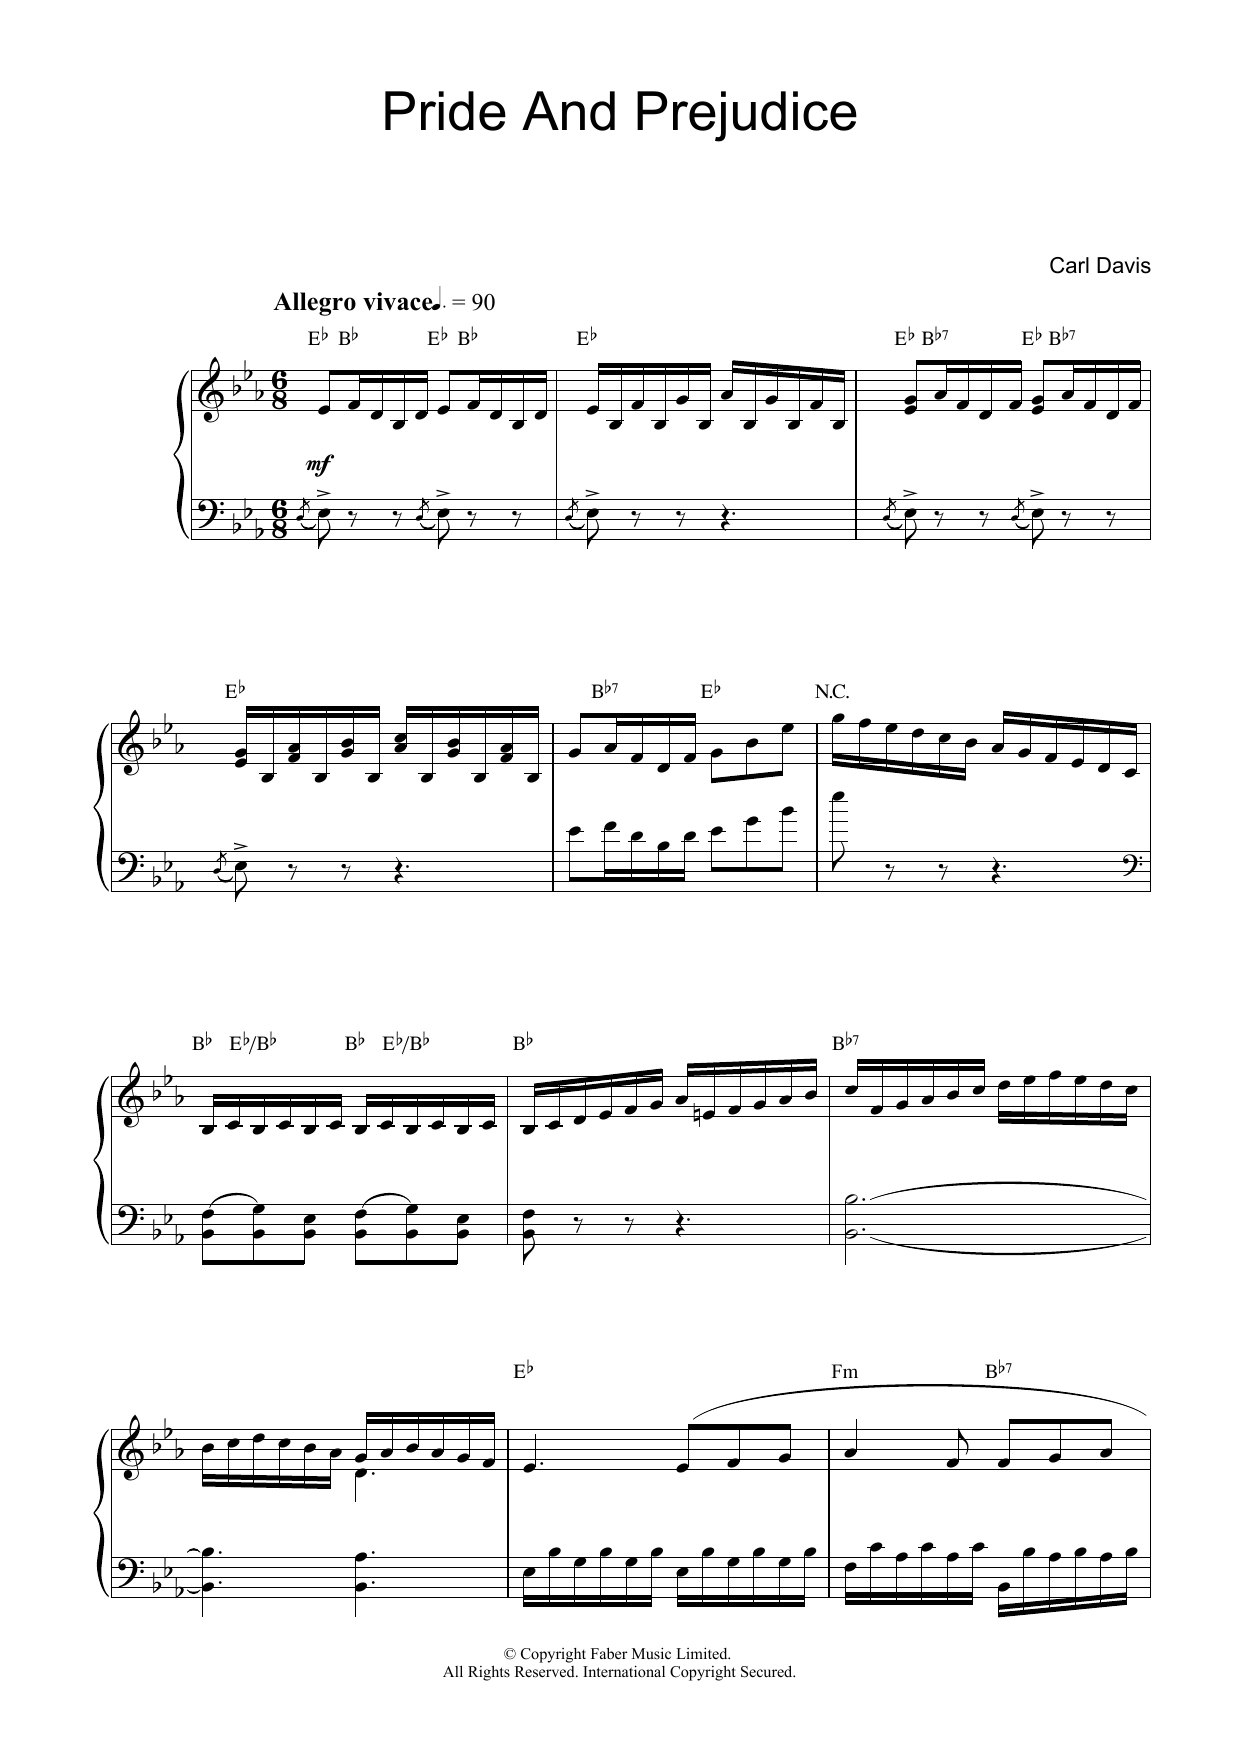 Carl Davis Pride And Prejudice Sheet Music Notes & Chords for Alto Saxophone - Download or Print PDF